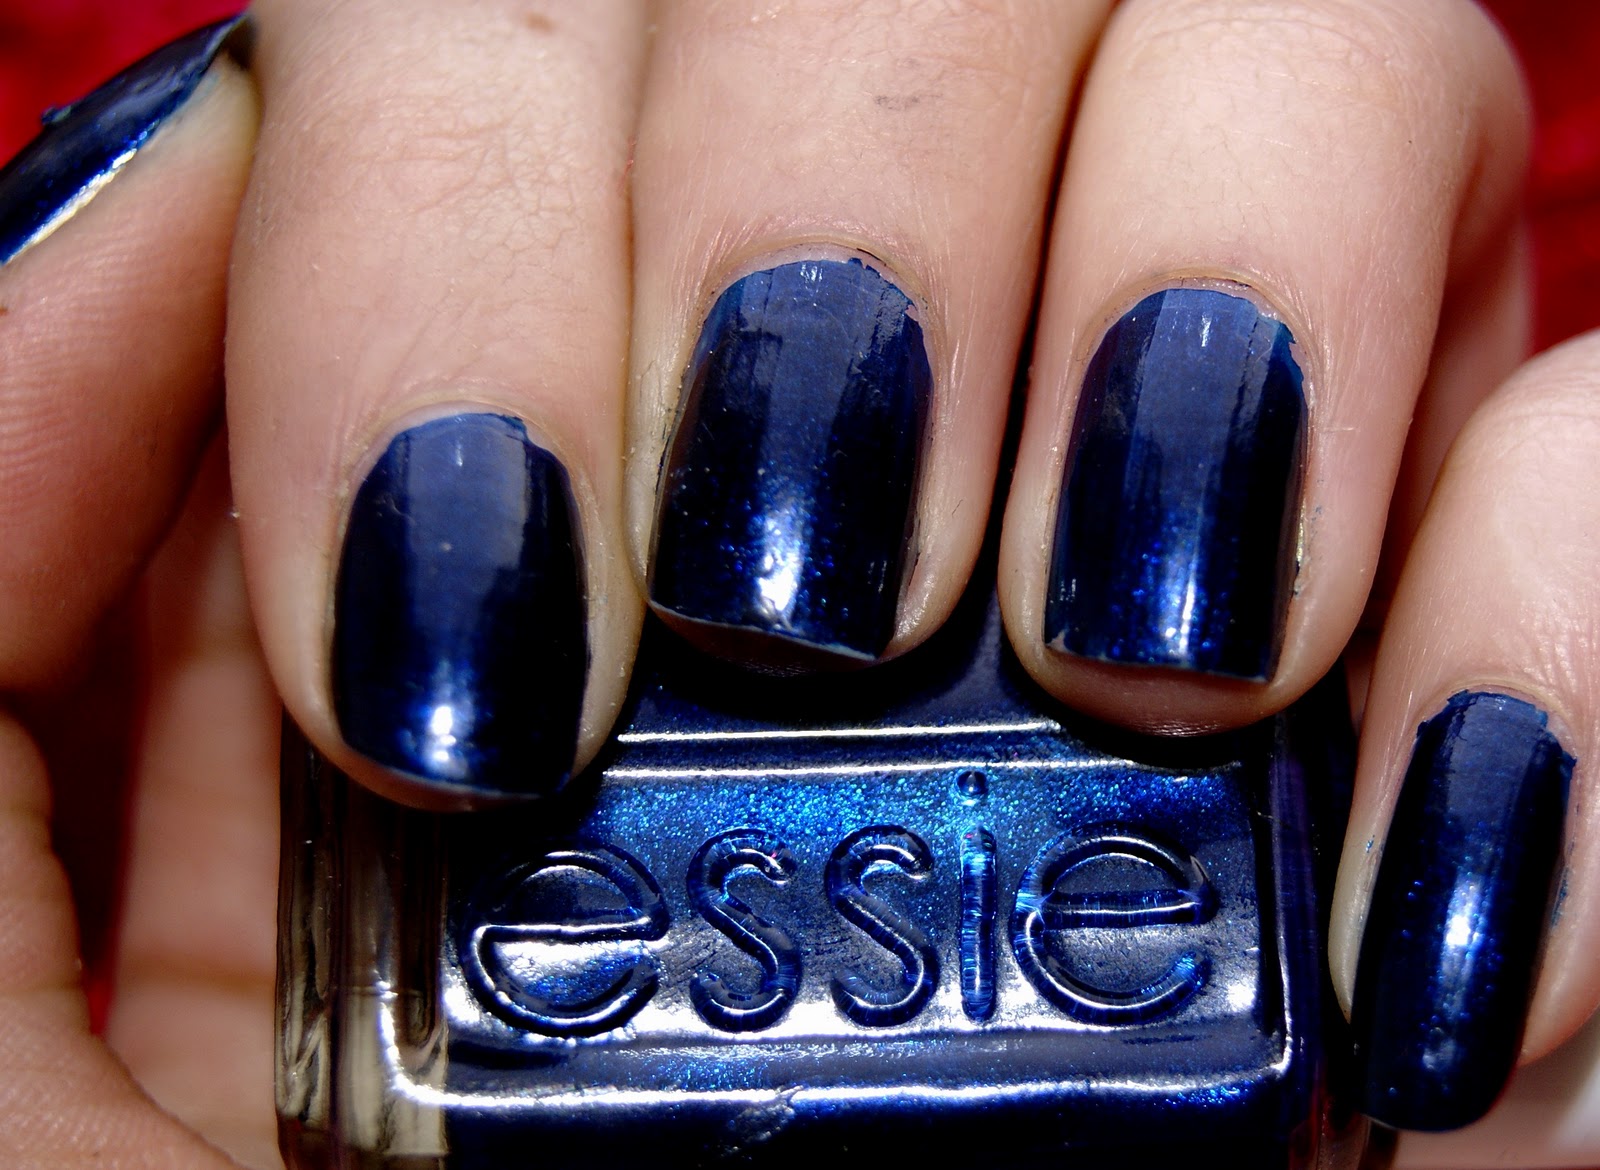 2. Essie "Midnight Cami" Nail Polish - wide 10